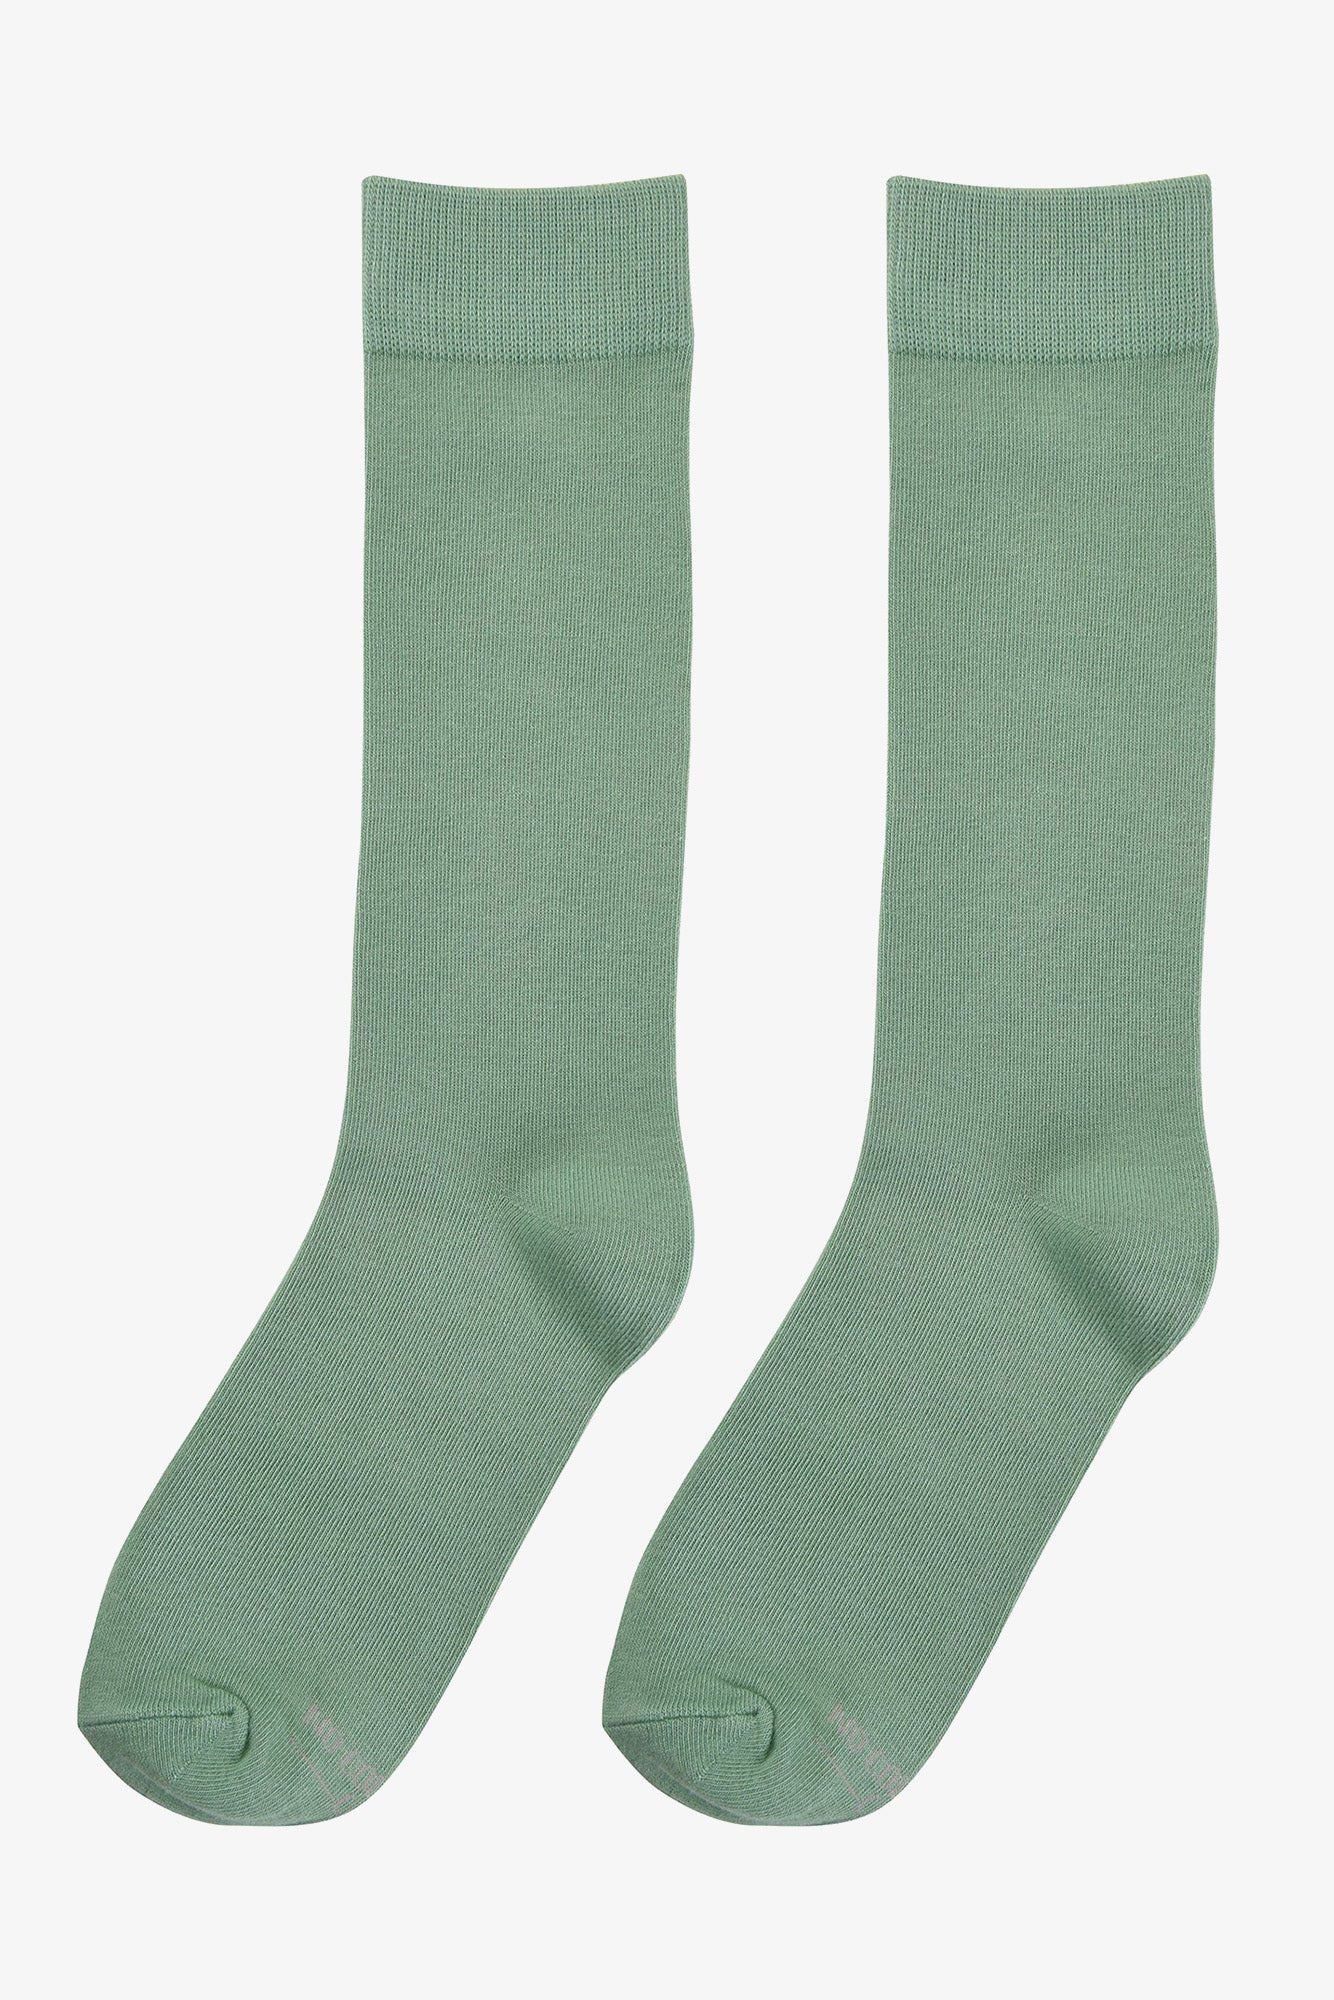 Solid Sage Groomsmen Socks by No Cold Feet